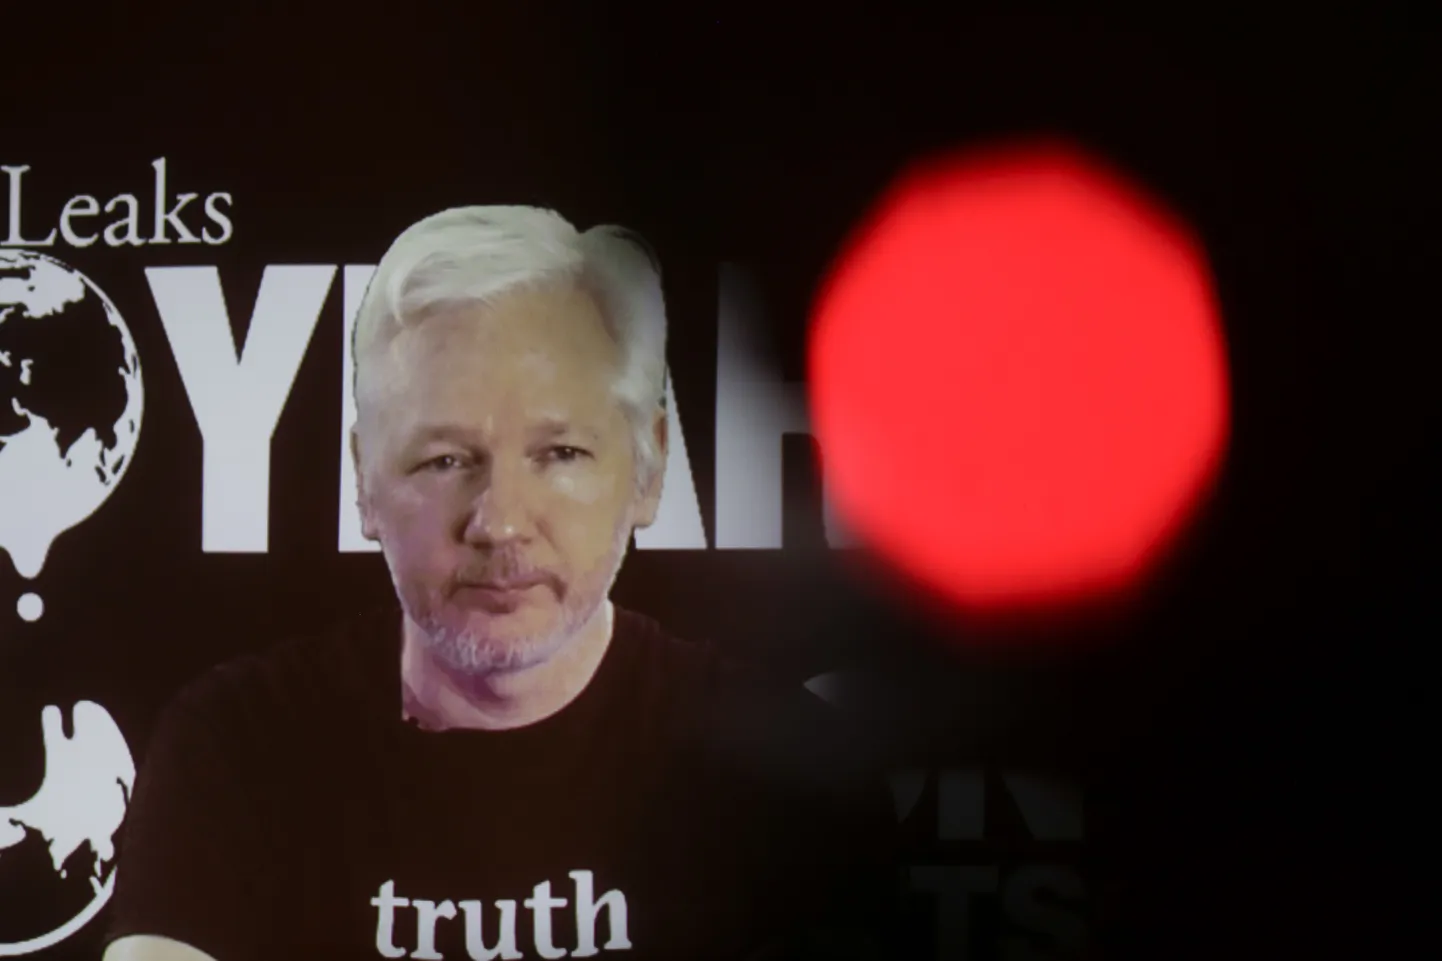 WikiLeaksi asutaja Julian Assange.